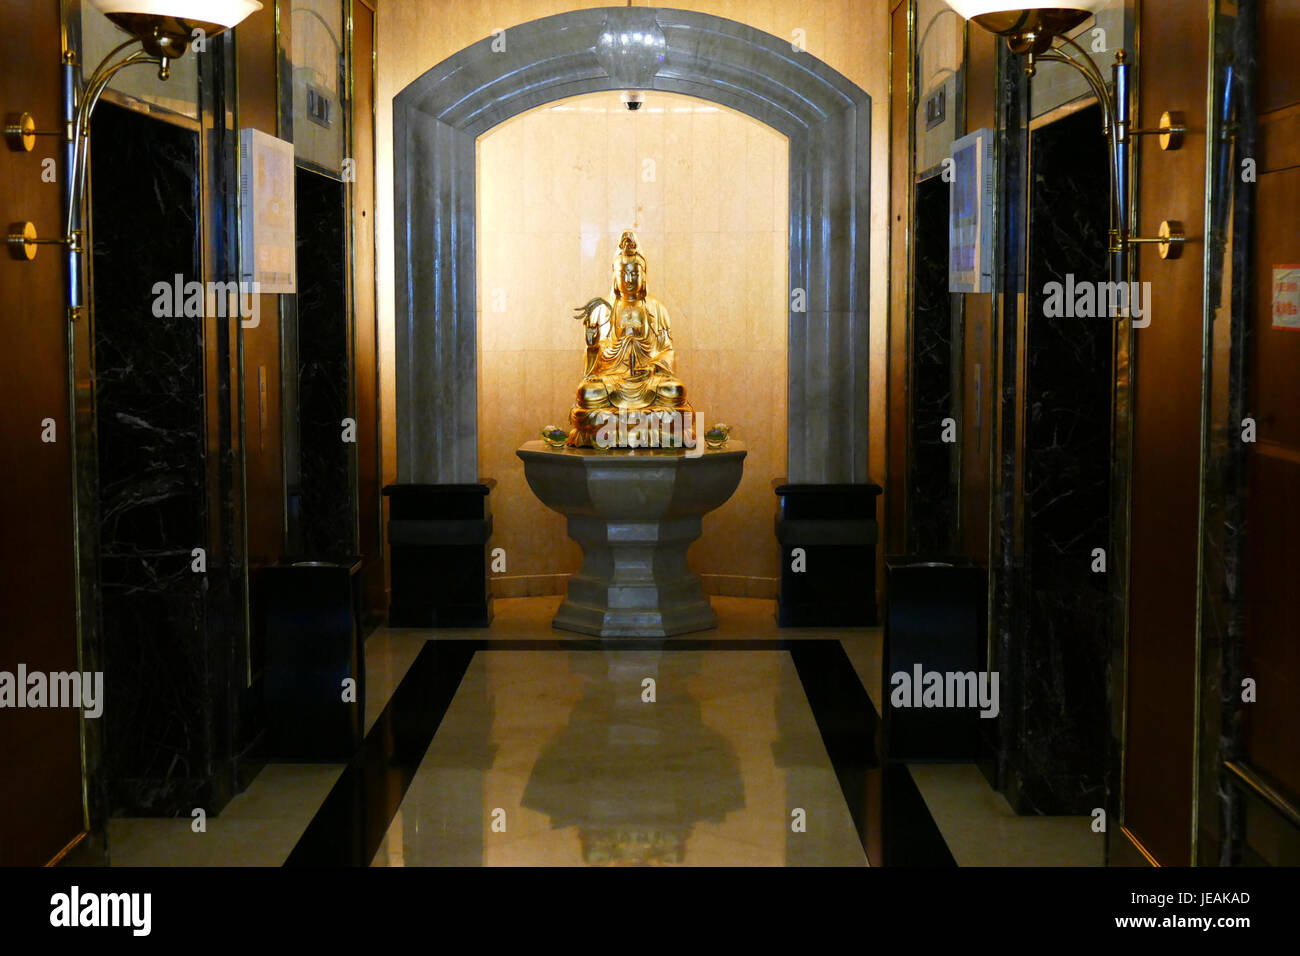 2014.11.21.085740 Lifts Grand Metropark Hotel Hangzhou Stock Photo